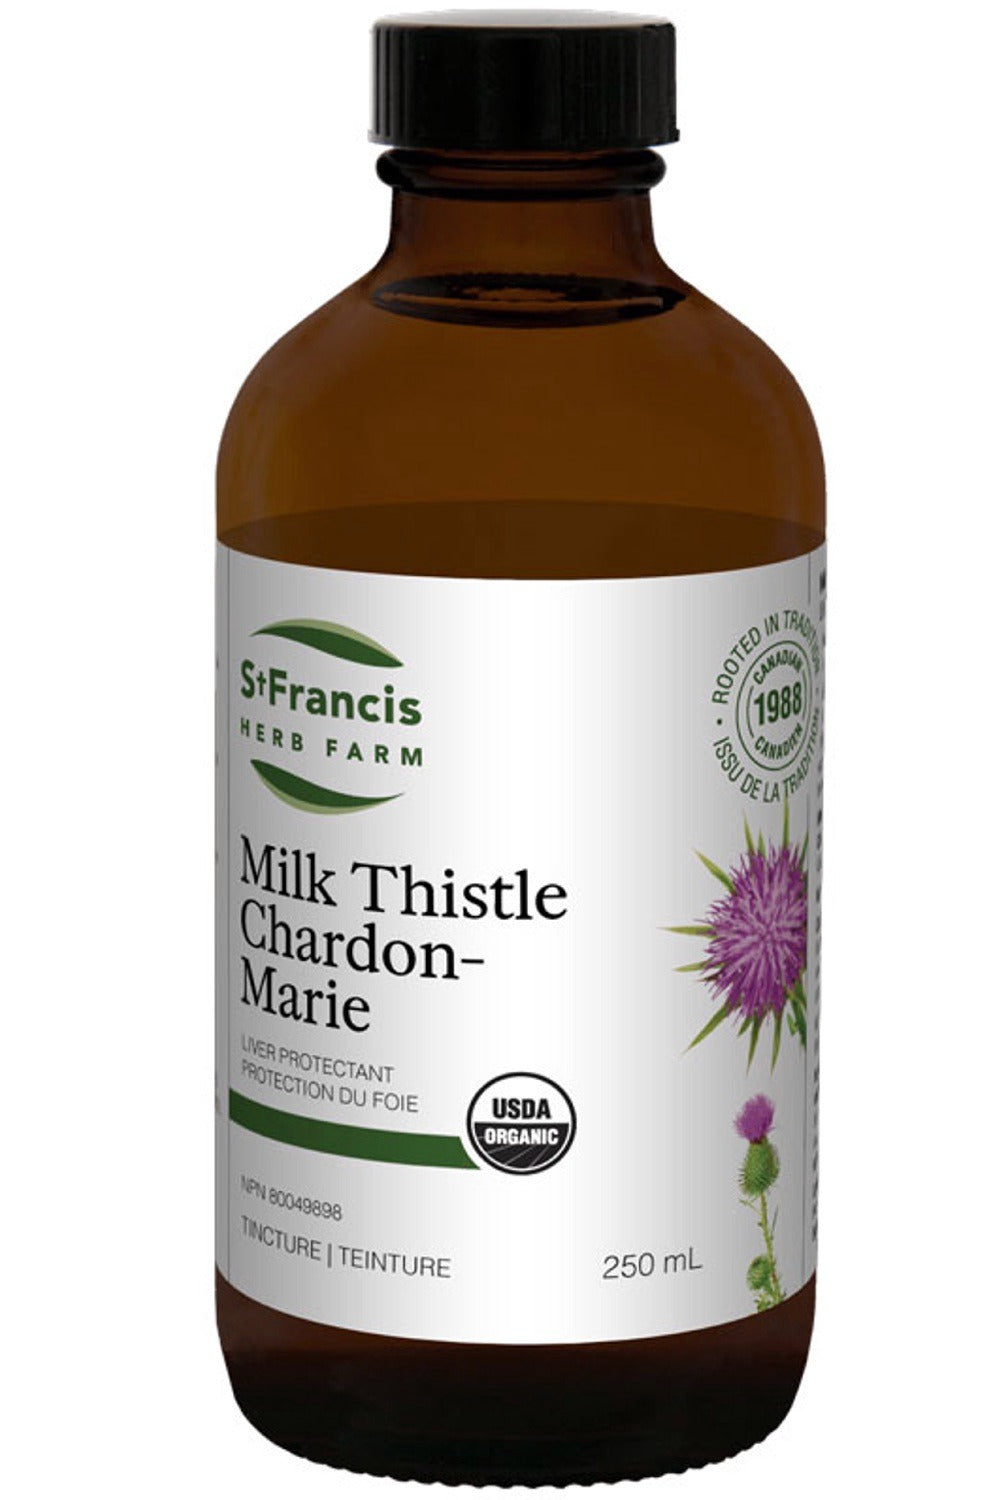 ST FRANCIS HERB FARM Milk Thistle (250 ml)